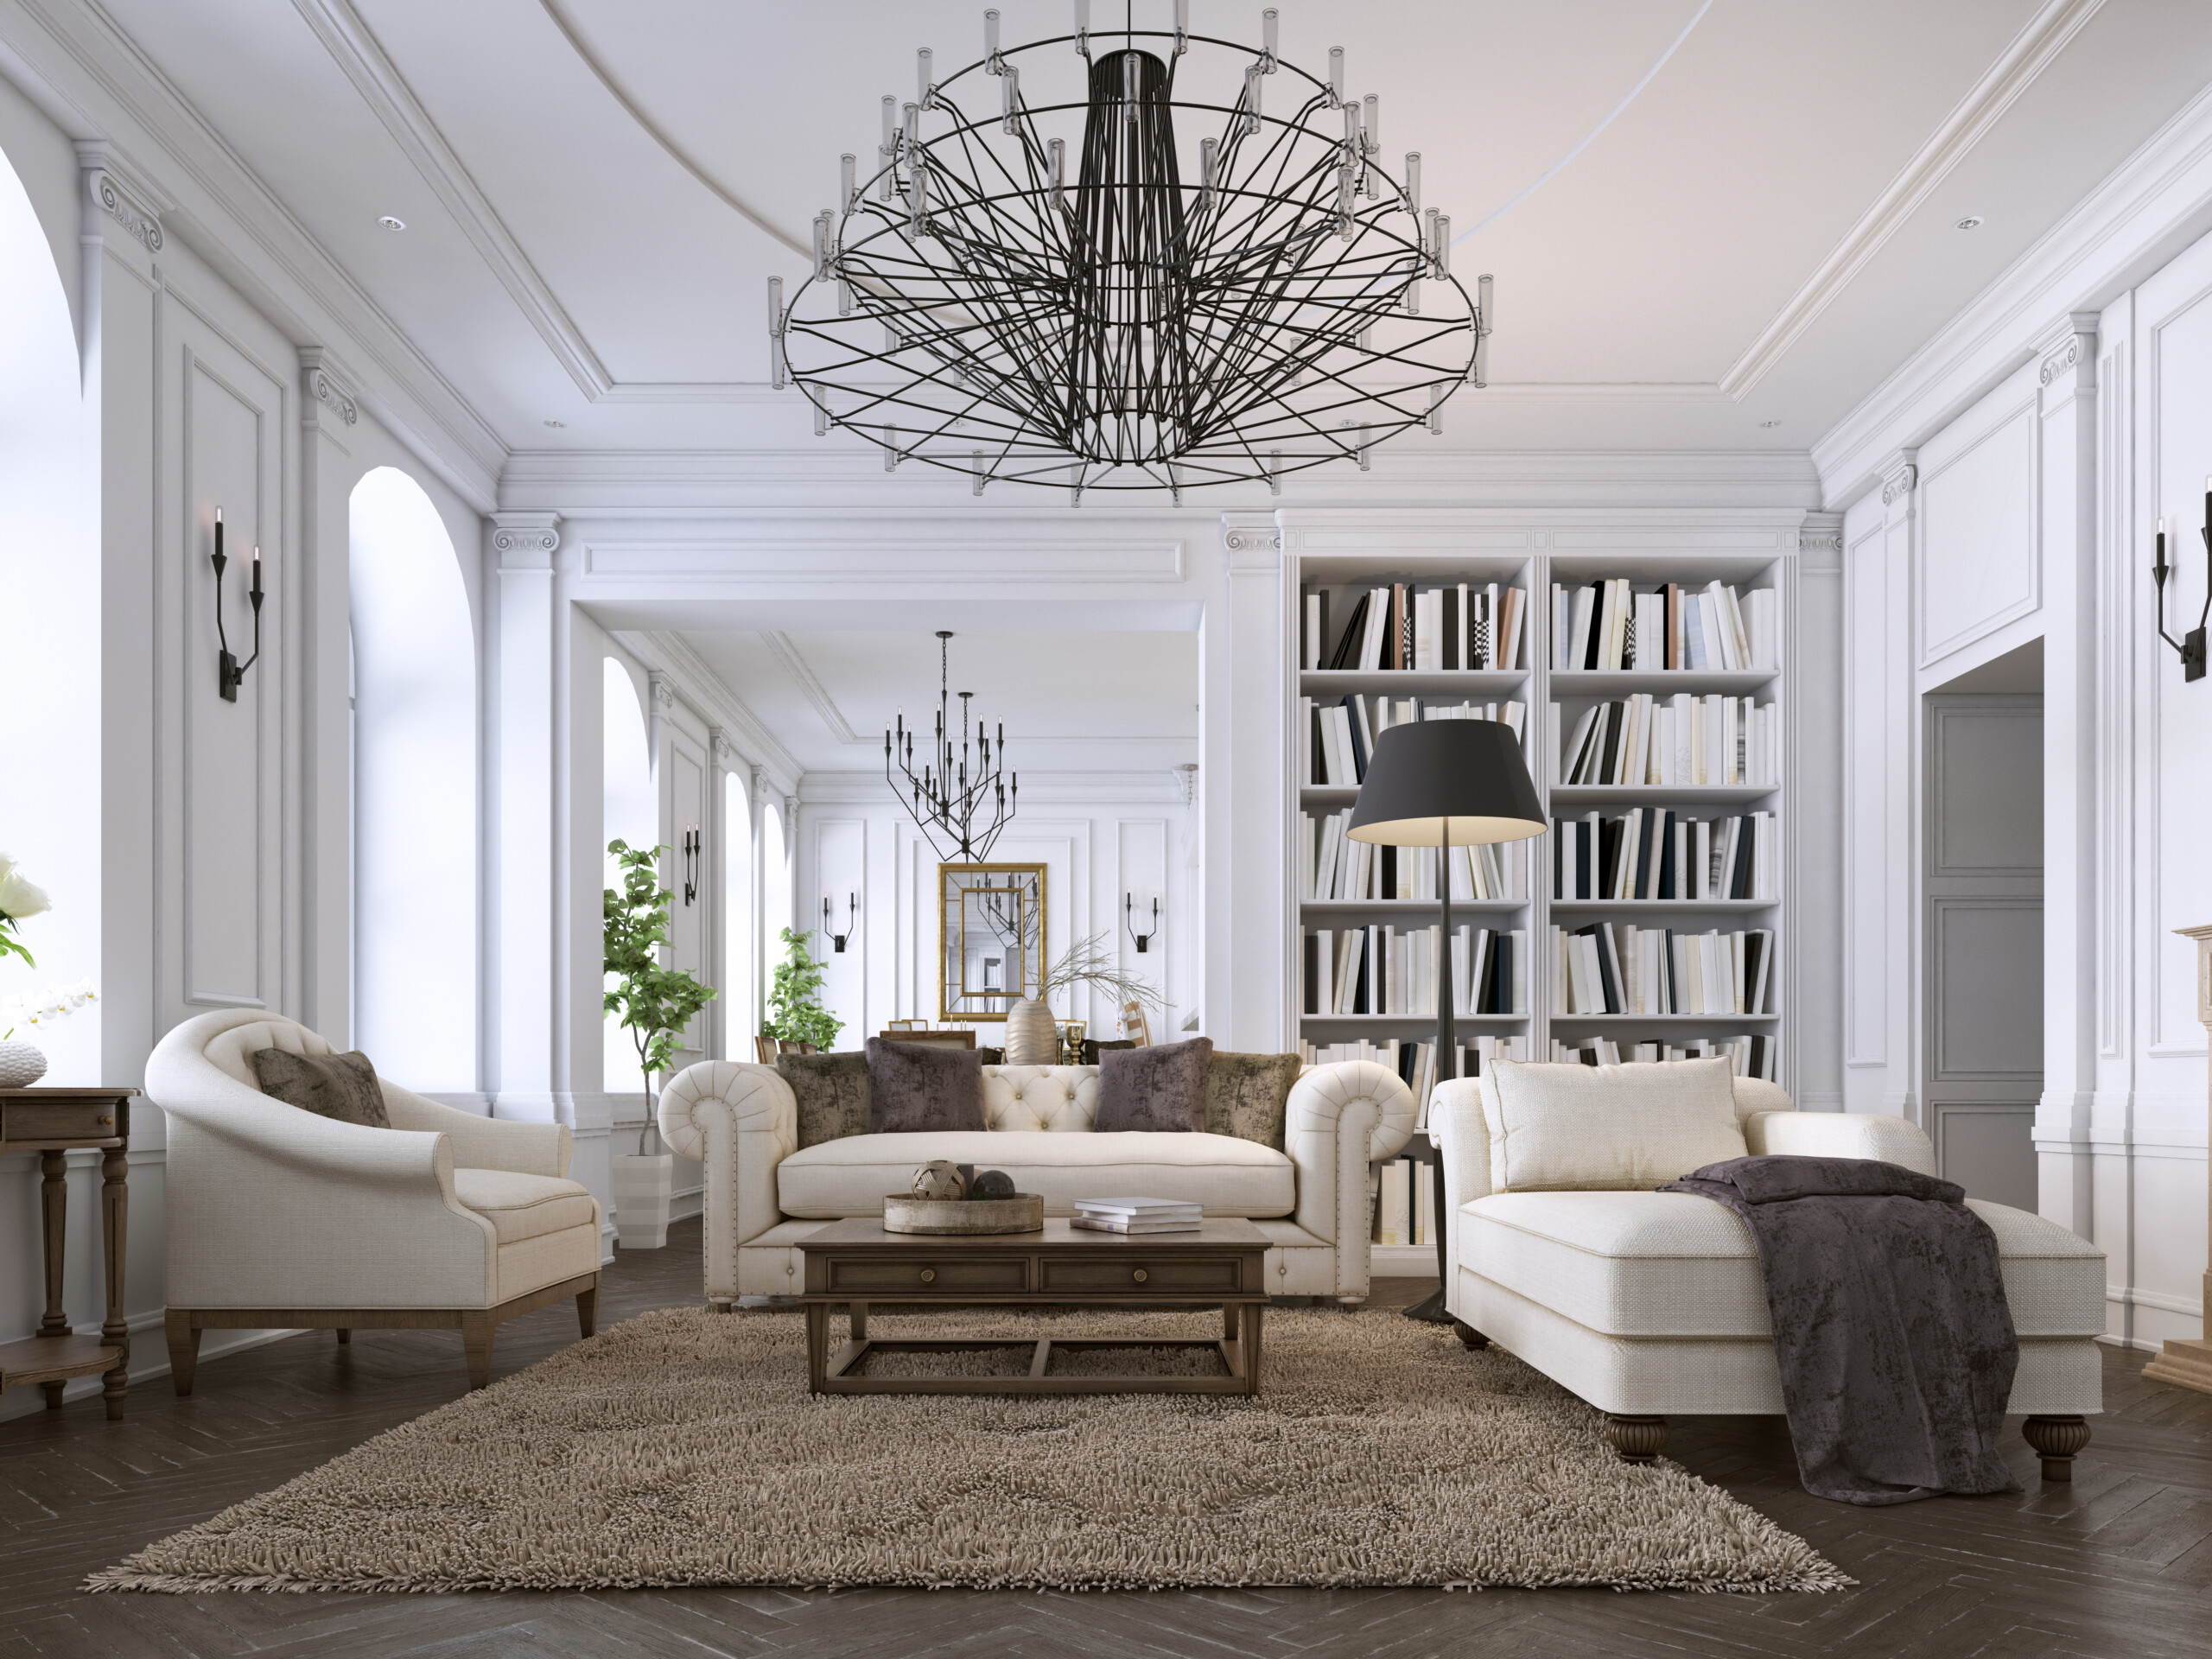 Luxury Modern Home Interior Design Ideas | Public Content Network - The ...